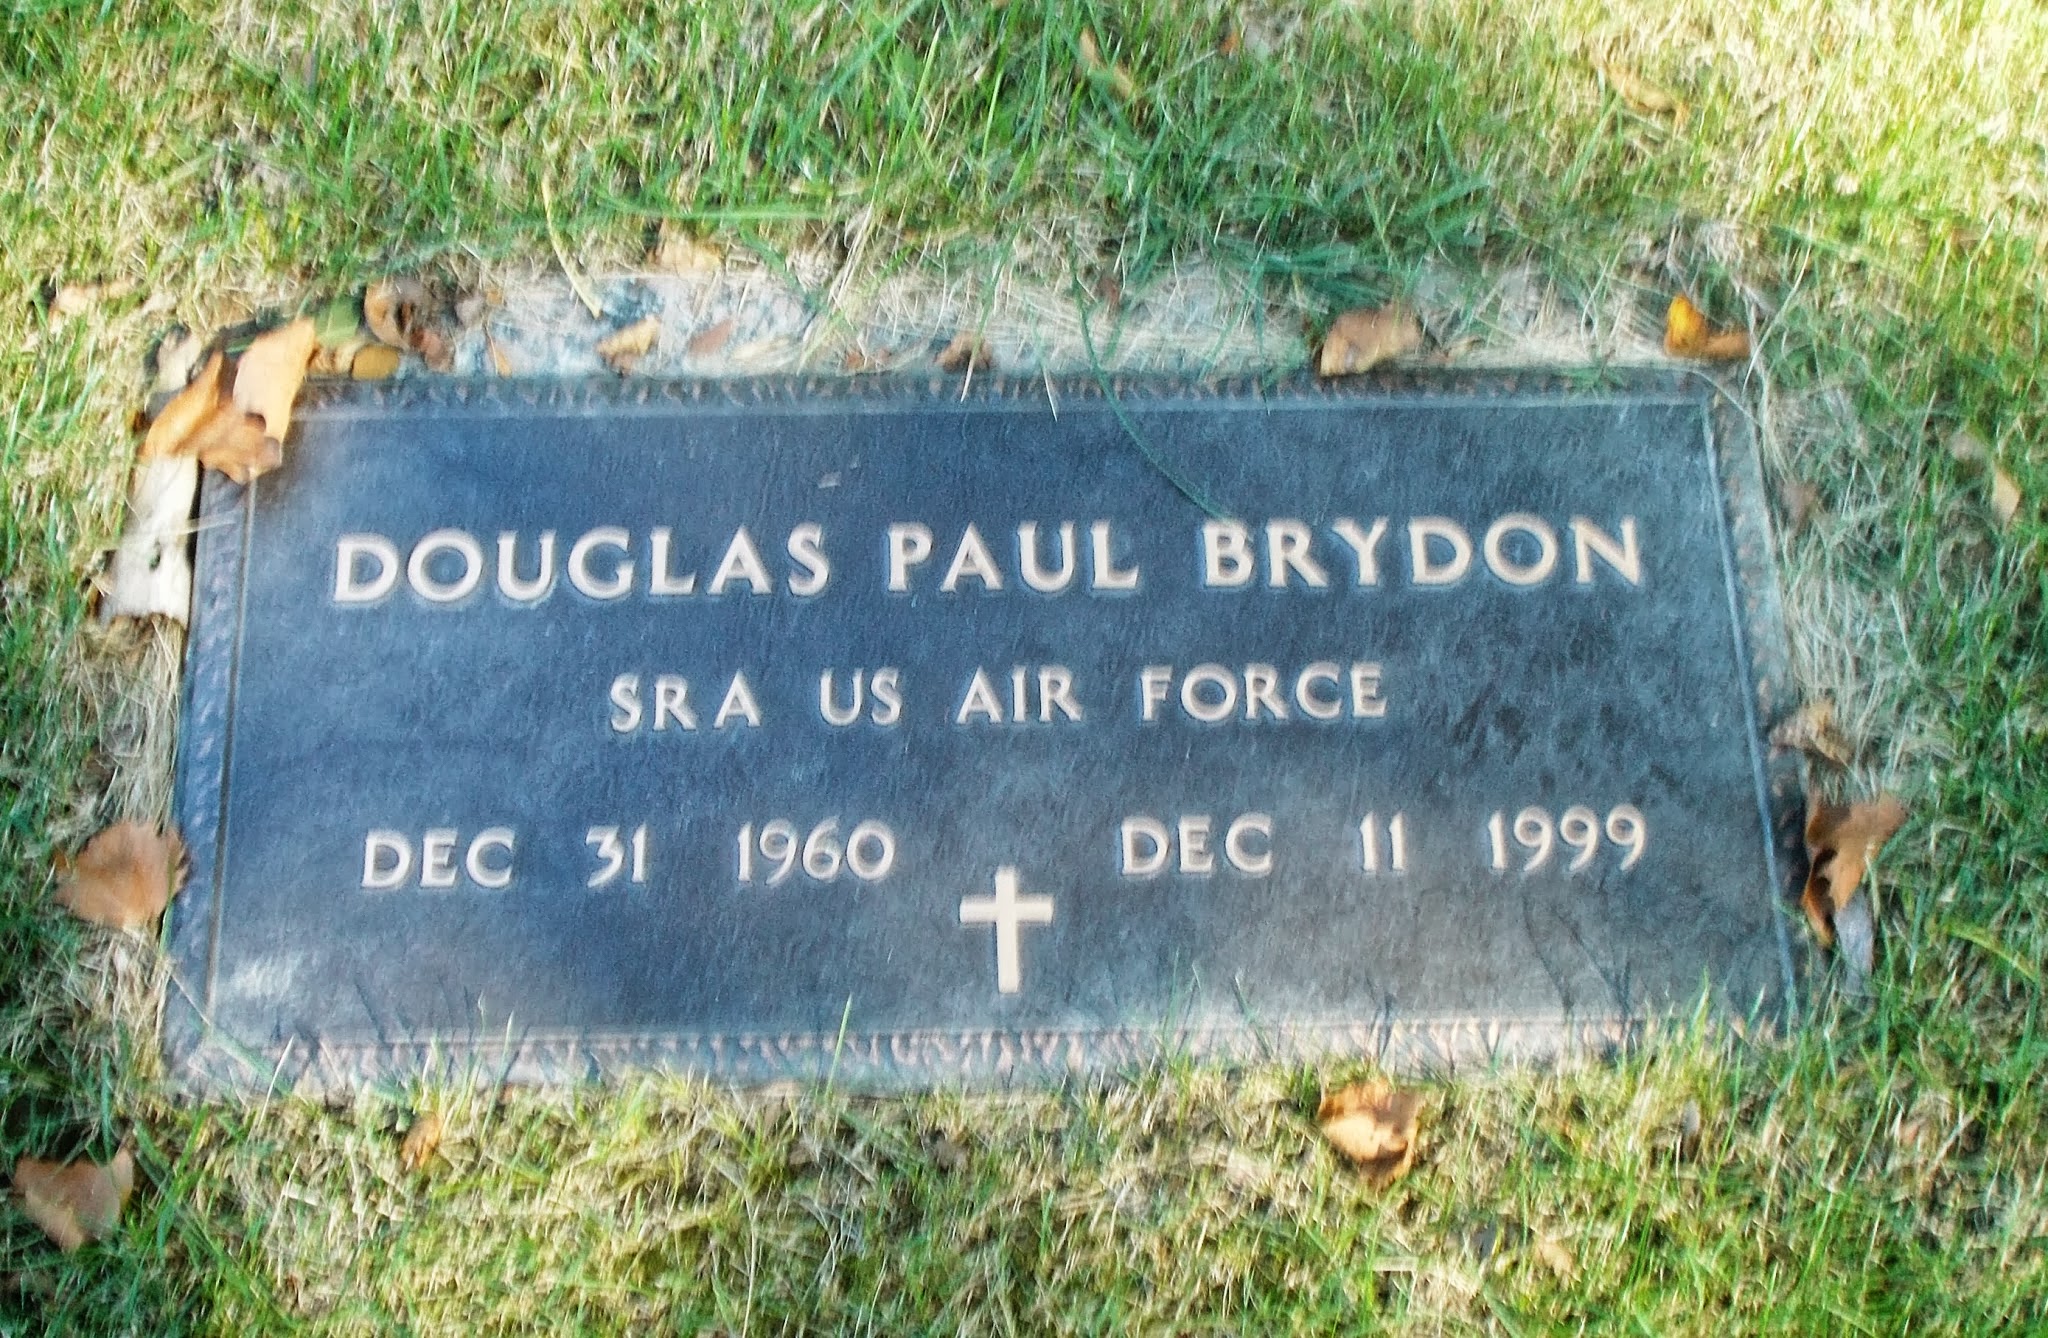 Douglas Paul Brydon